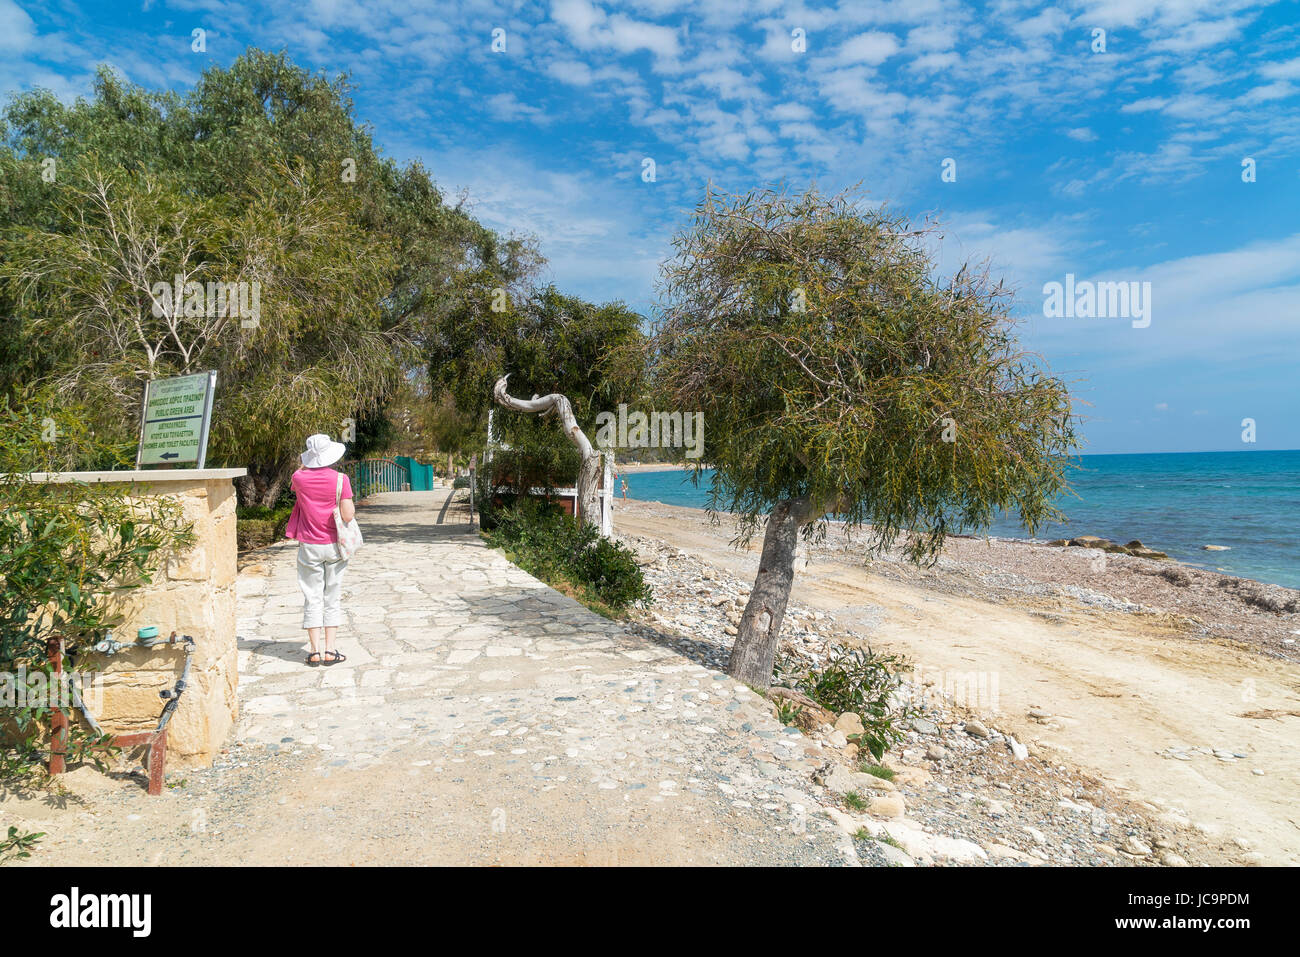 Pissouri beach, near hilltop village, Cyprus Stock Photo